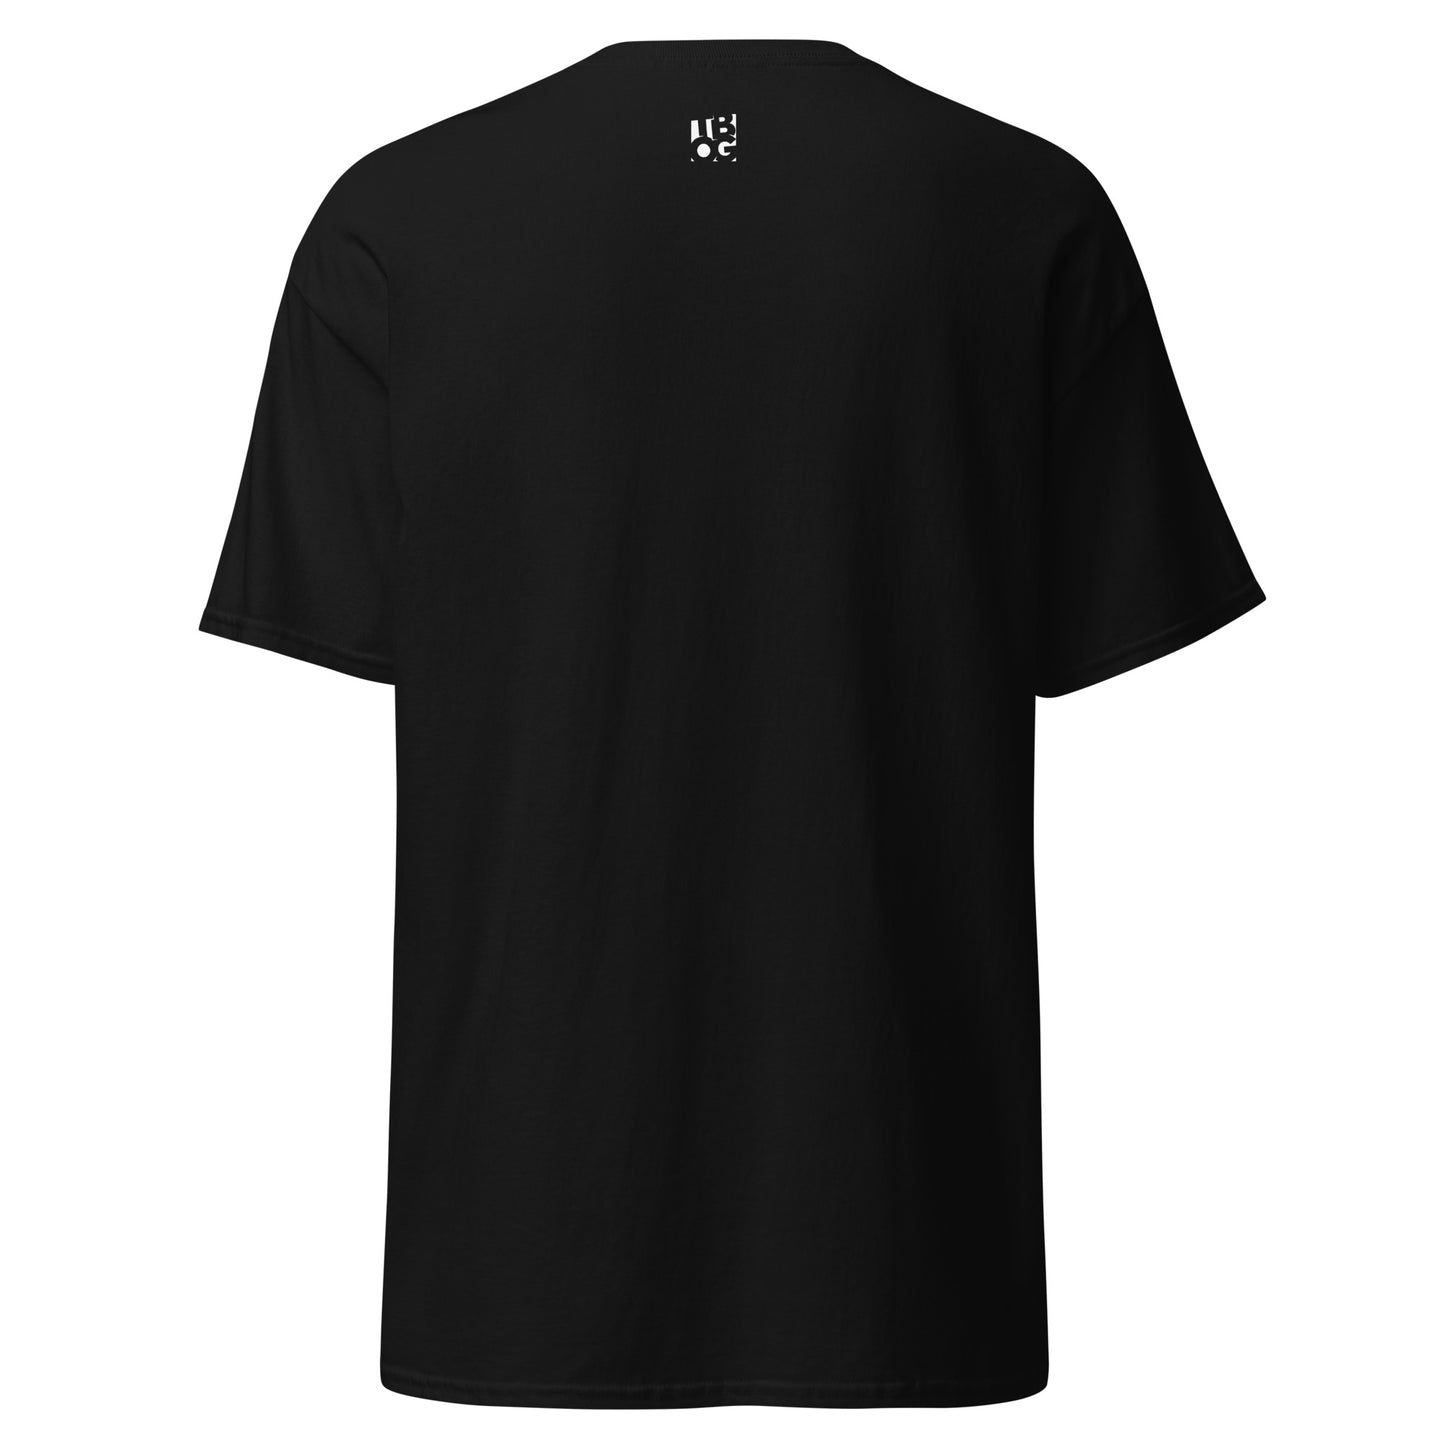 Guilt Free T-Shirt(Black)